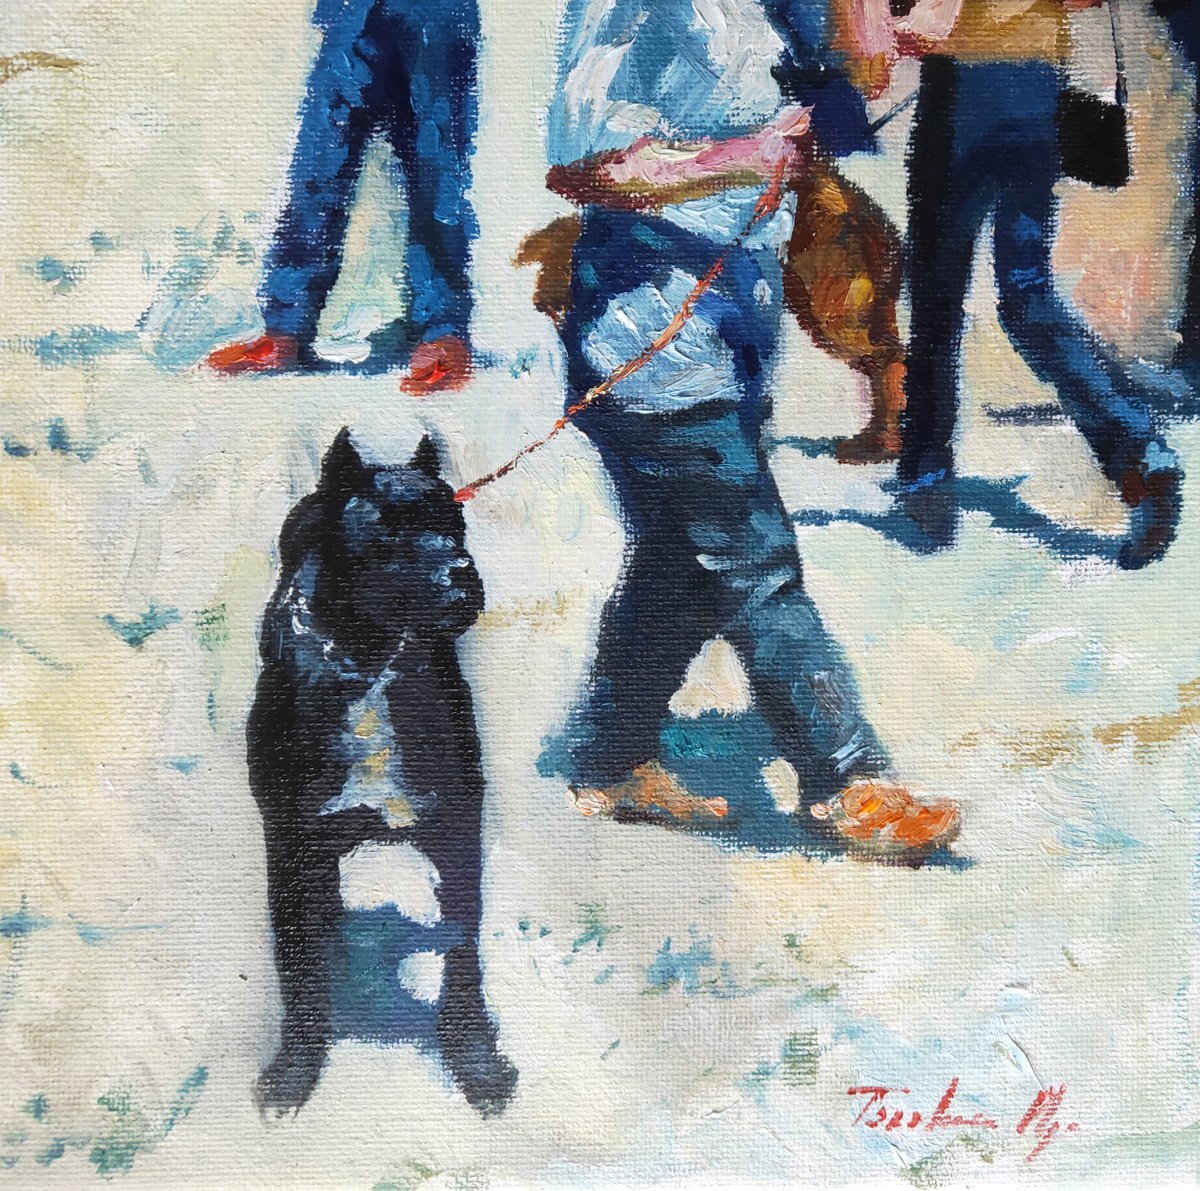 Walking Dog by Olga Tsarkova by Olga Tsarkova